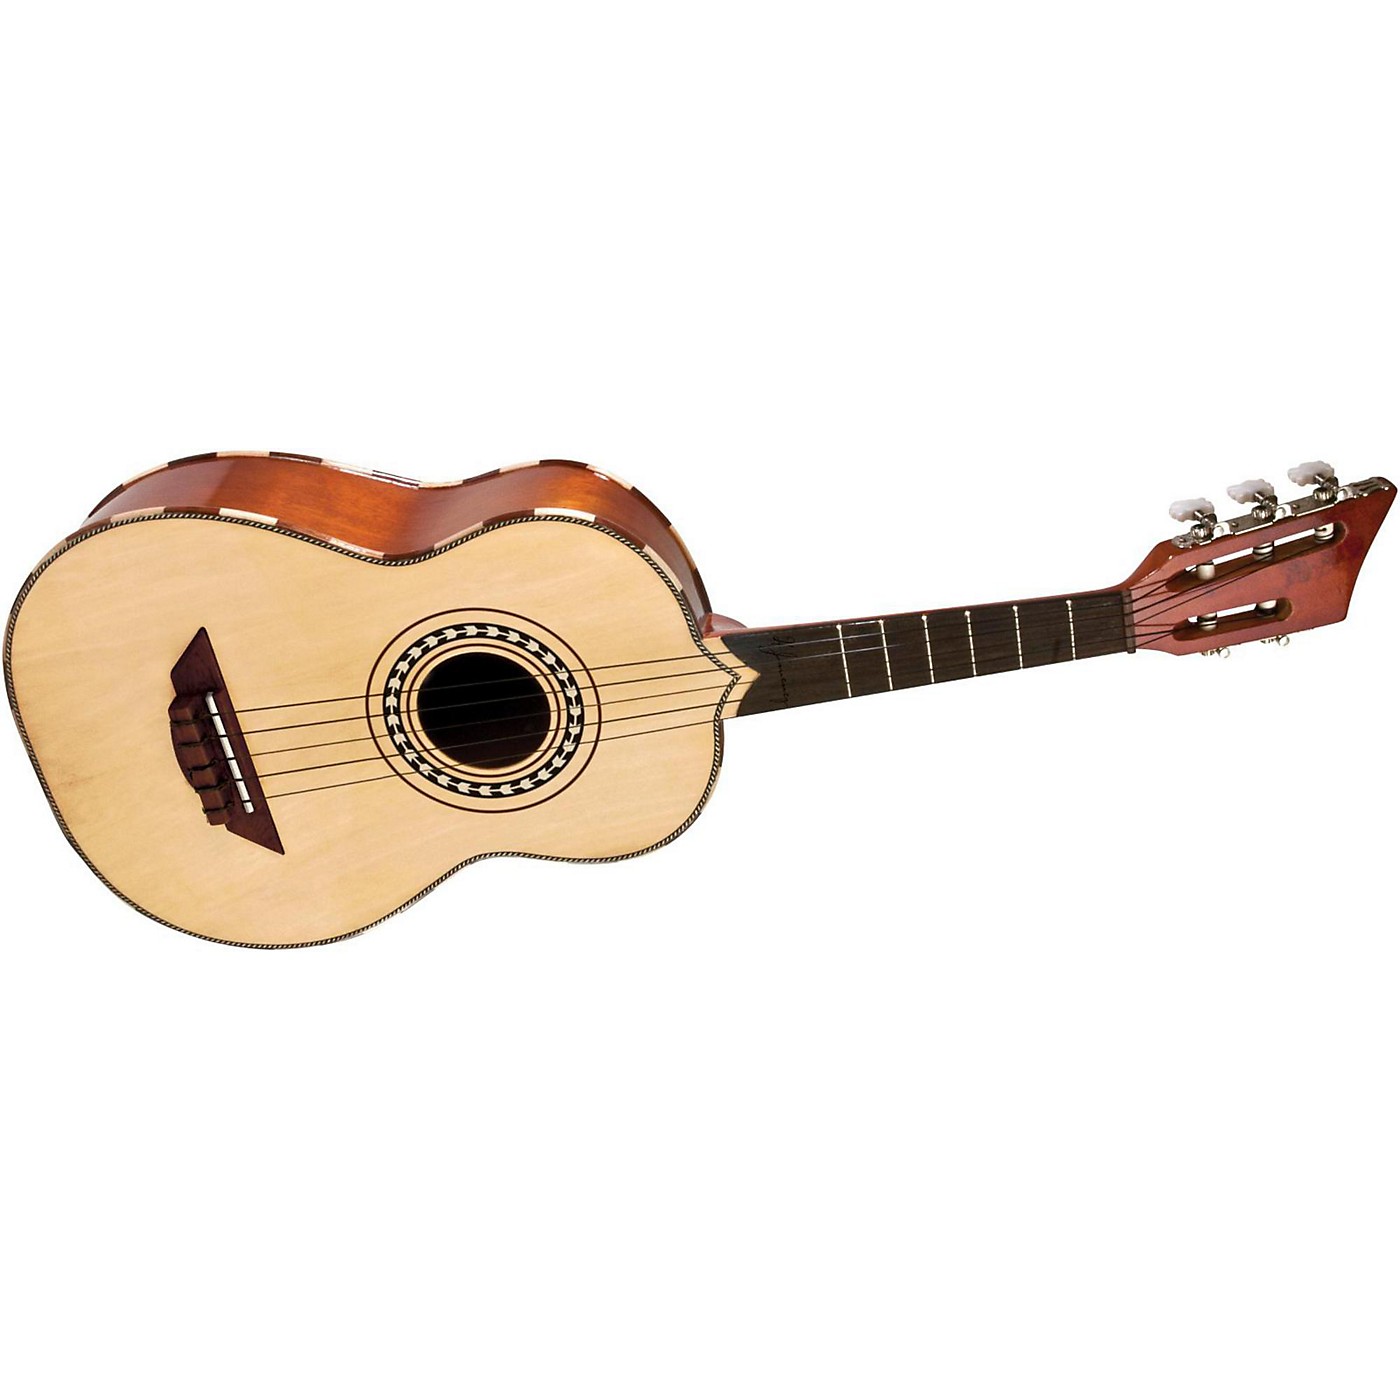 H. Jimenez LV2 Quetzal Vihuela (Beautiful Songbird) Acoustic Guitar thumbnail